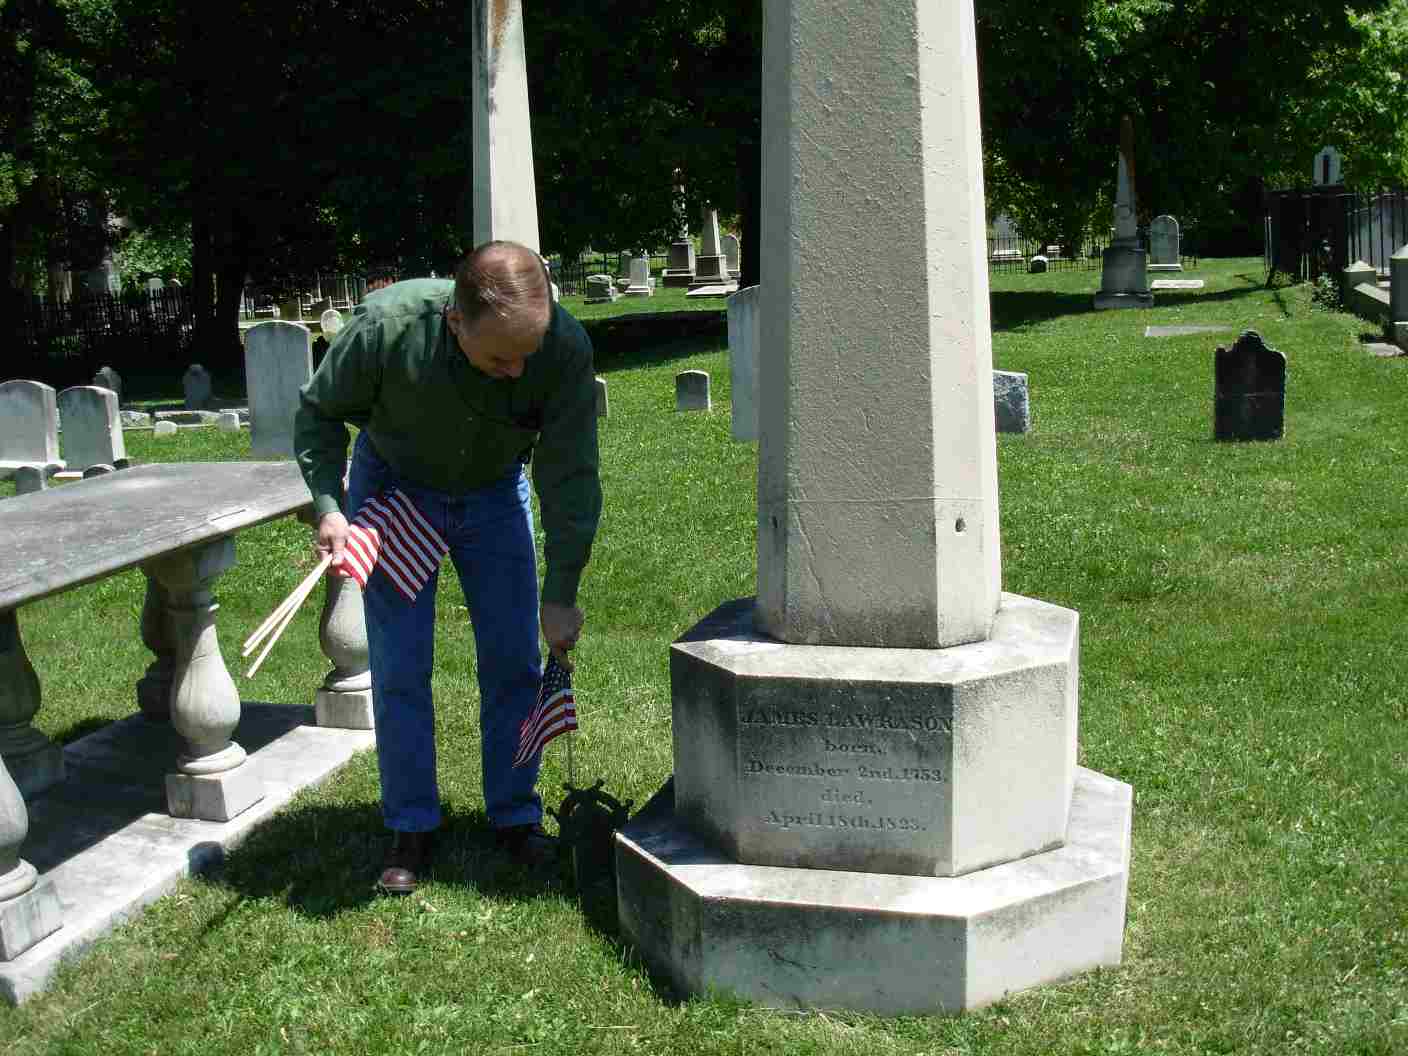 James Lawrason Grave Marking 2010